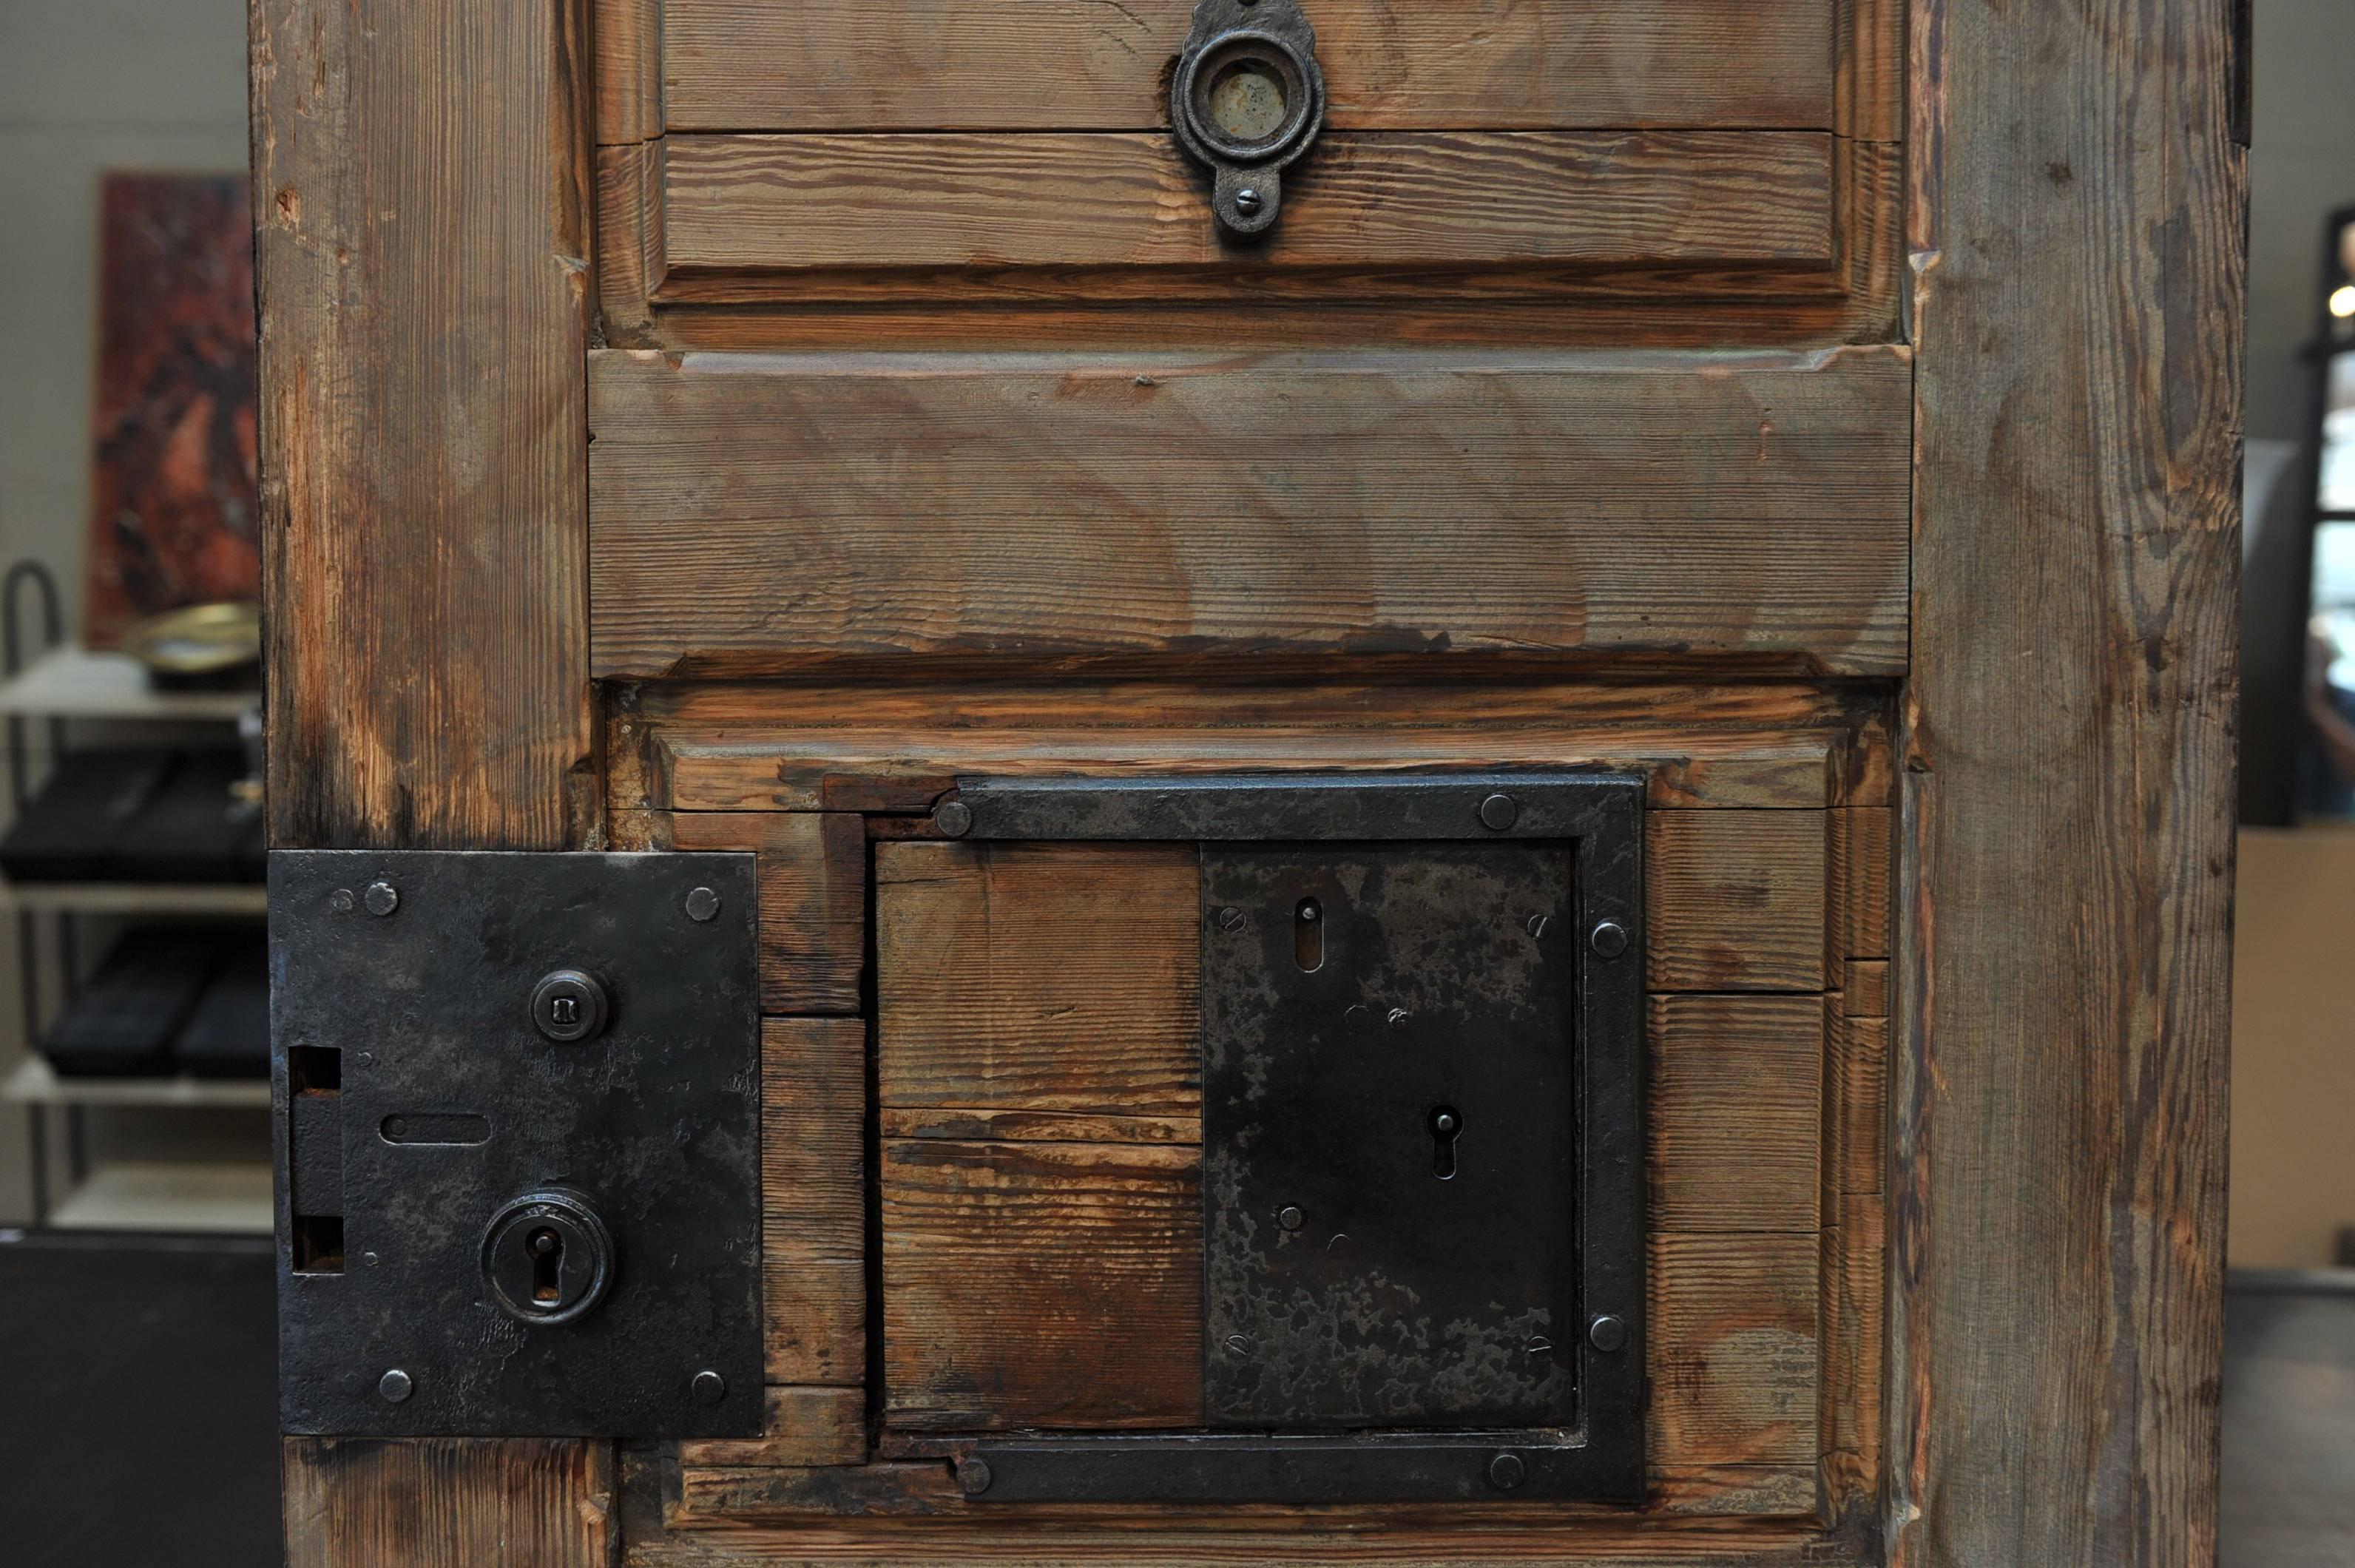 British 19th Century Riveted Iron and Pine Prison Door, circa 1850